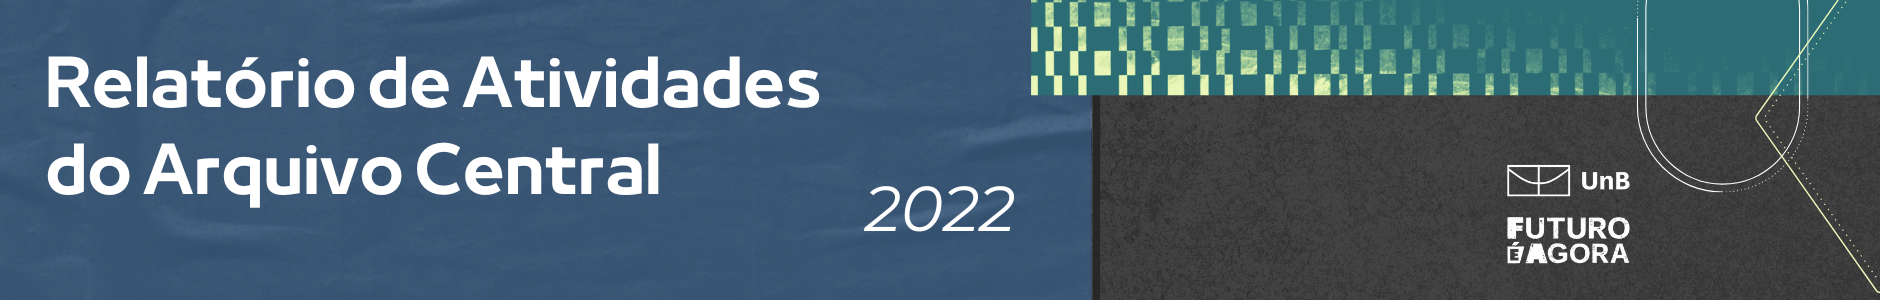 faixa relatorio de atividades ace 2022